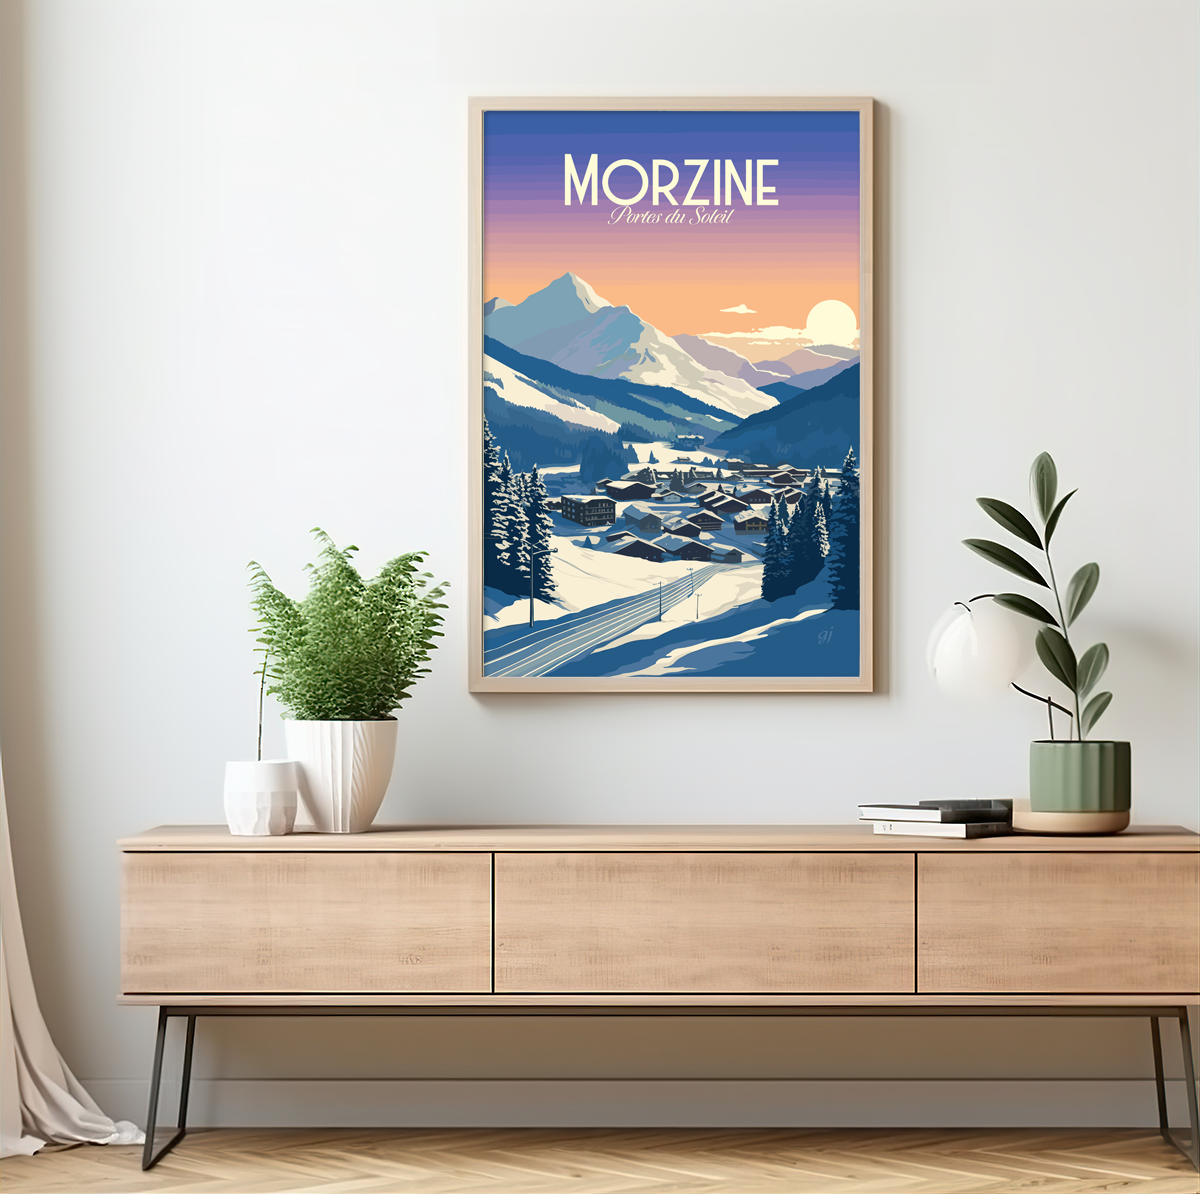 Morzine poster by bon voyage design